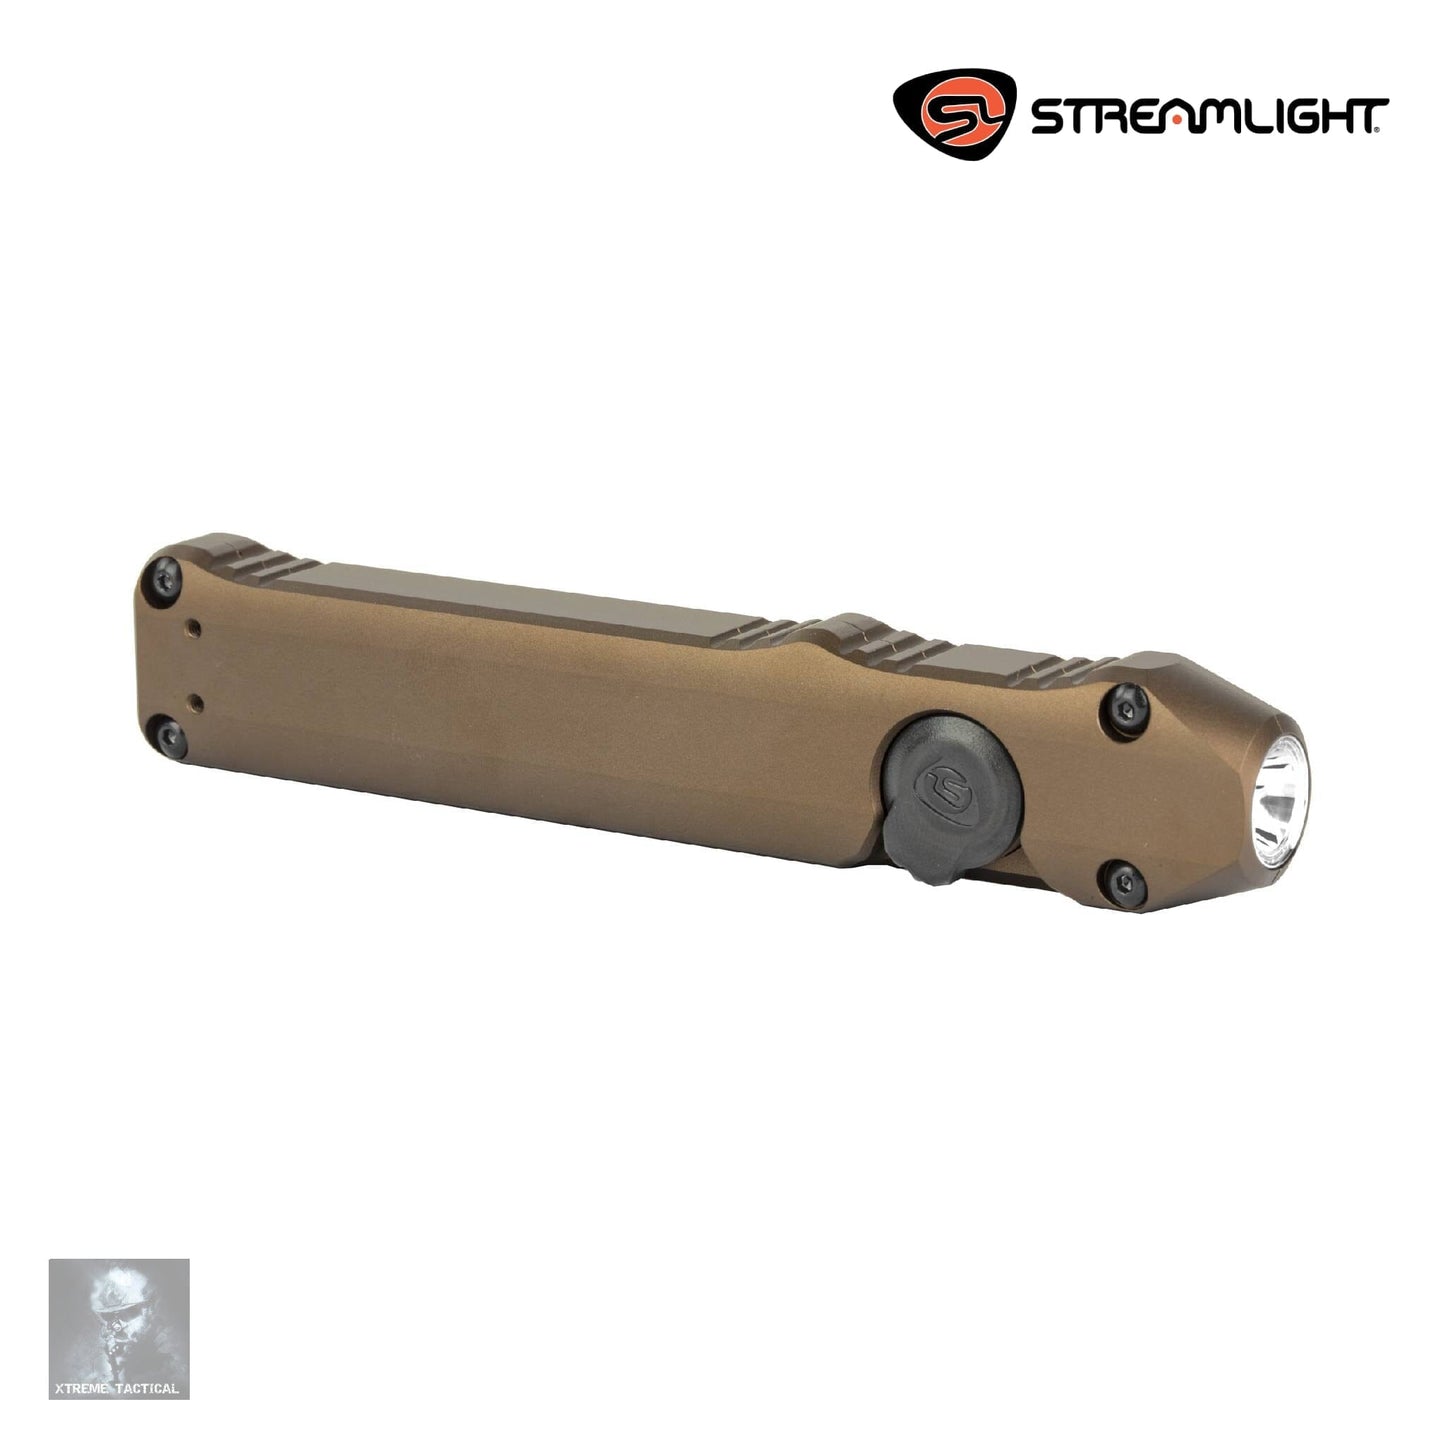 Streamlight Wedge EDC Flashlight Coyote Tan - 88811 Flashlight Streamlight 